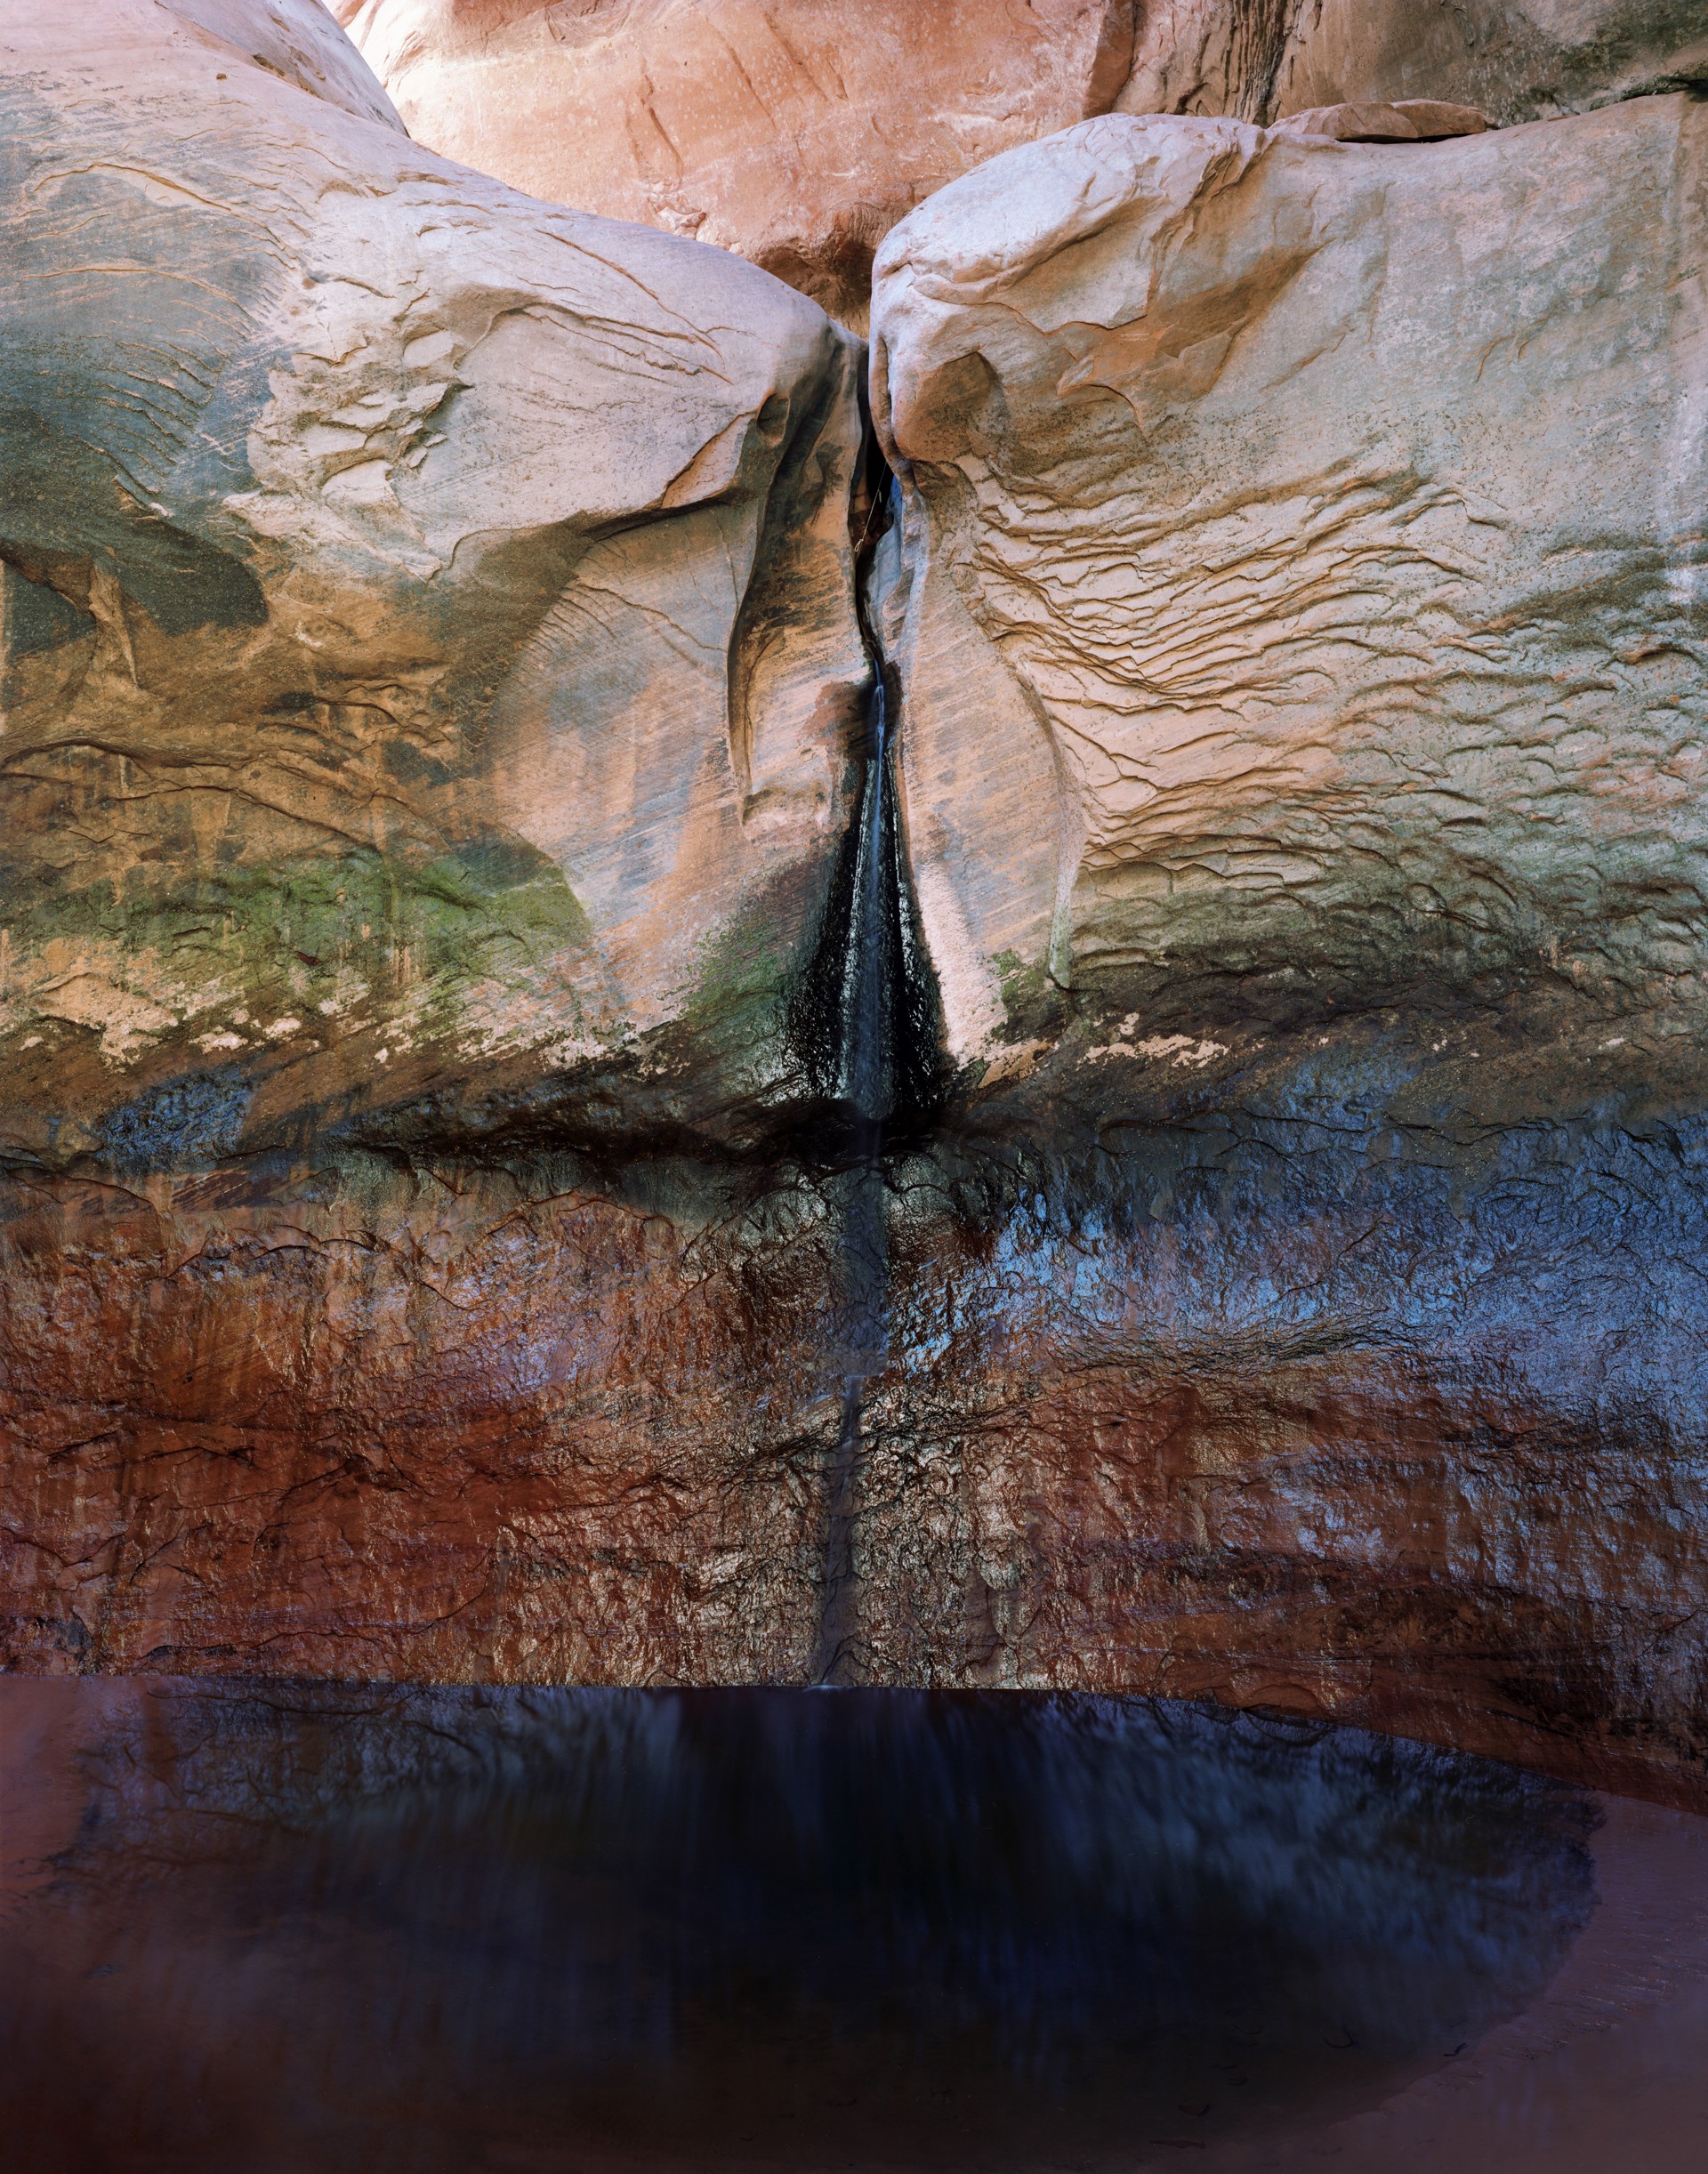 Rope Swing High Above a Receding Plunge Pool, Lake Powell/Glen Canyon, Utah 2022 by Laura McPhee